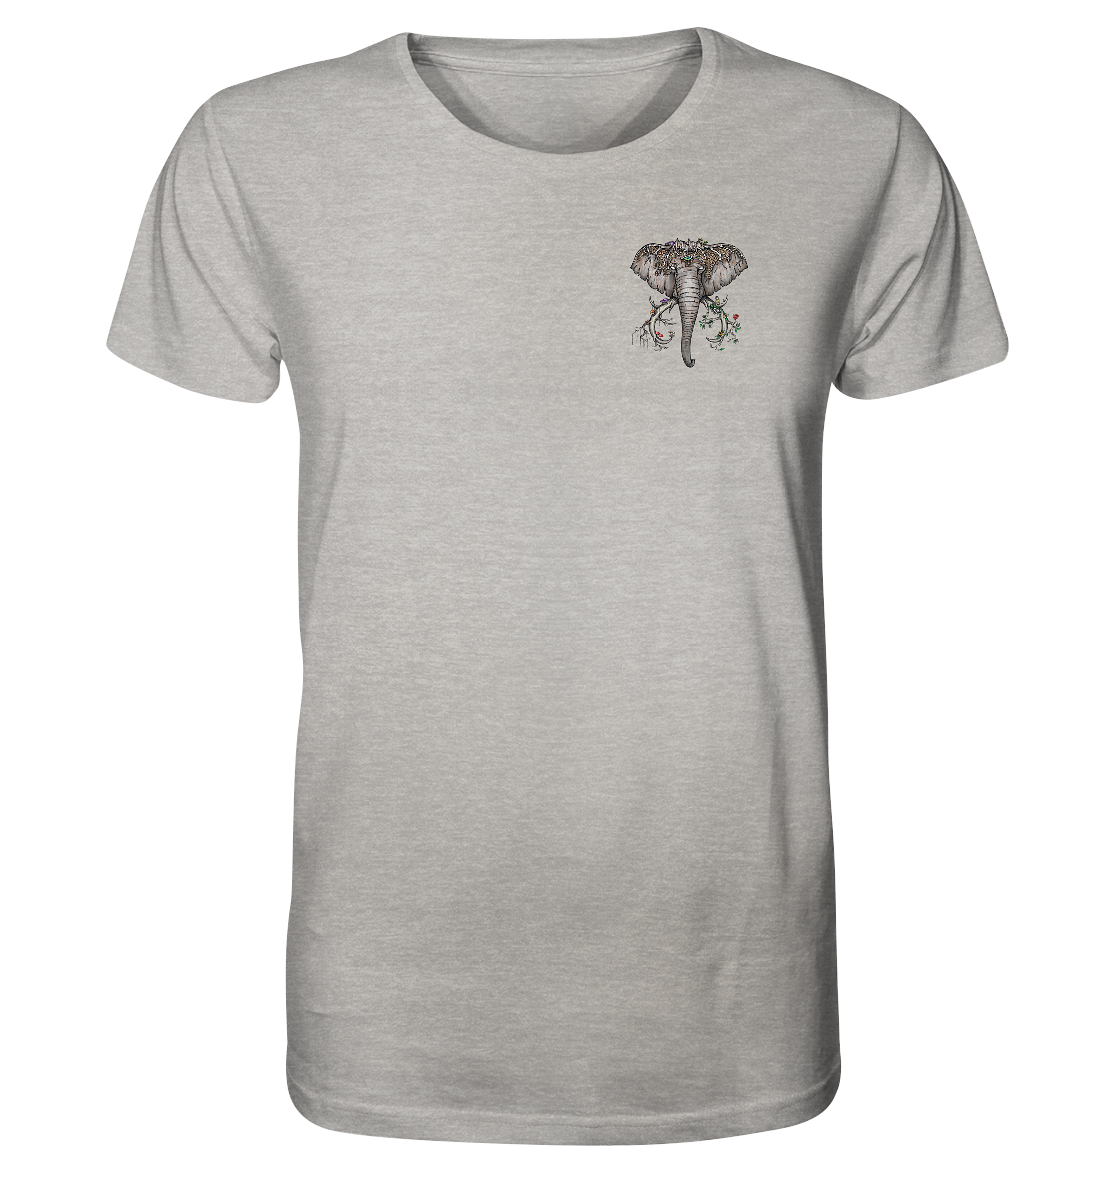 front-organic-shirt-meliert-c2c1c0-1116x-3.png